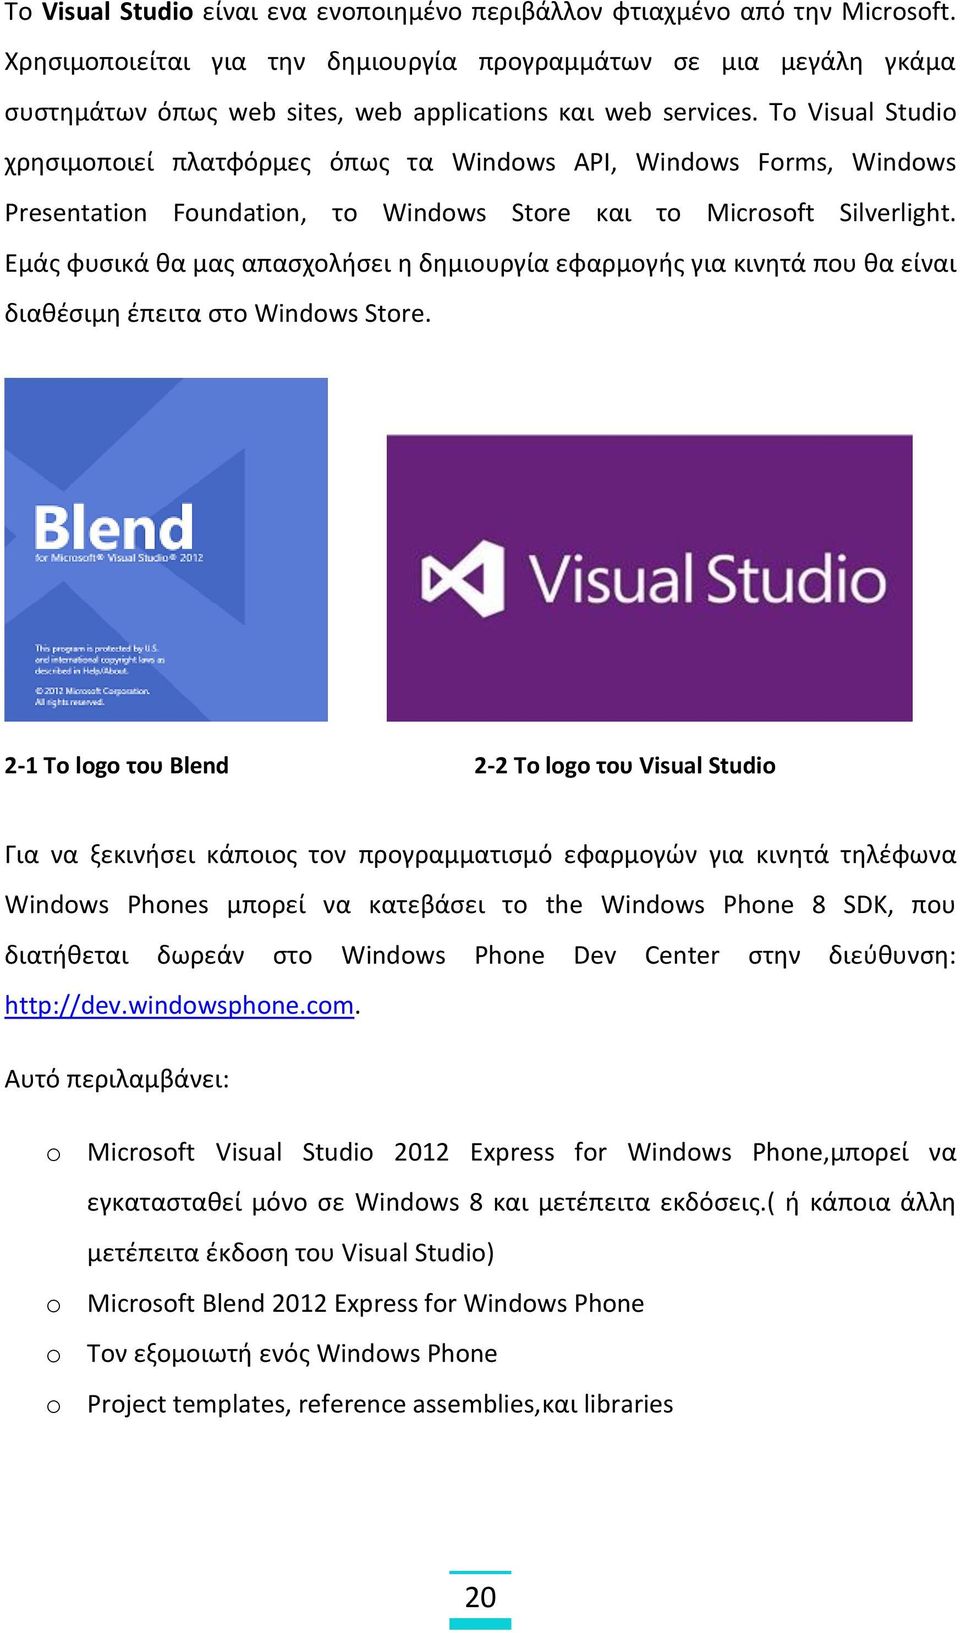 To Visual Studio χρησιμοποιεί πλατφόρμες όπως τα Windows API, Windows Forms, Windows Presentation Foundation, το Windows Store και το Microsoft Silverlight.